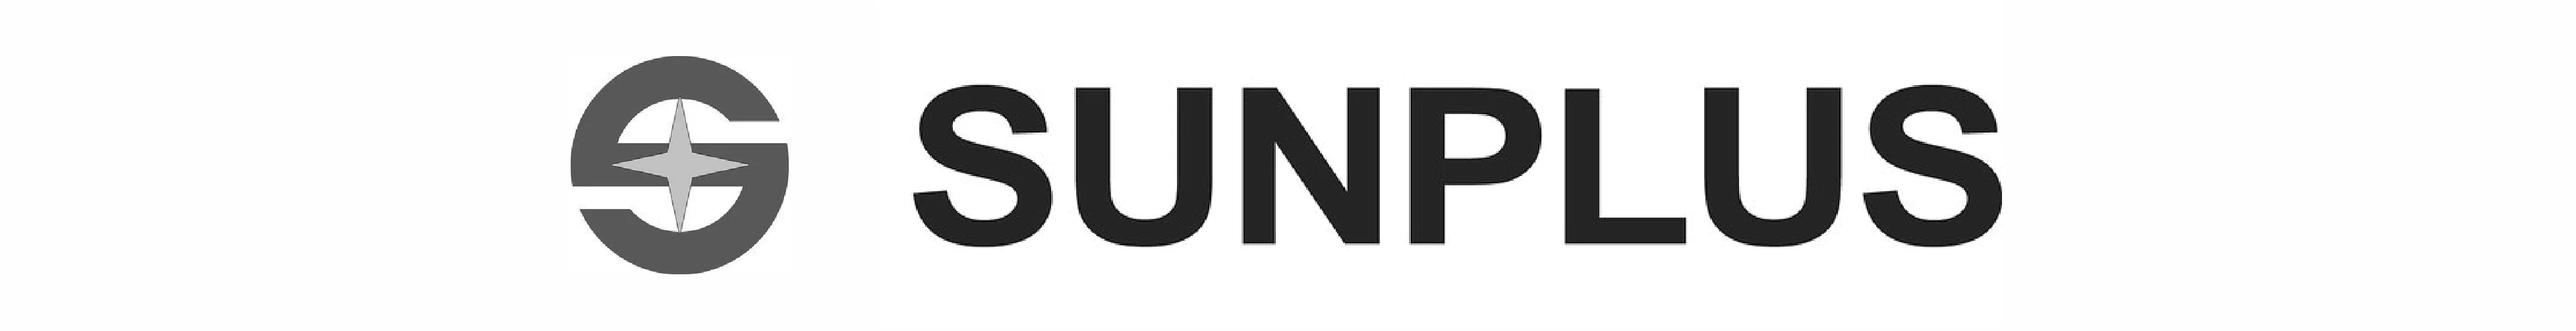 Sunplus_logo